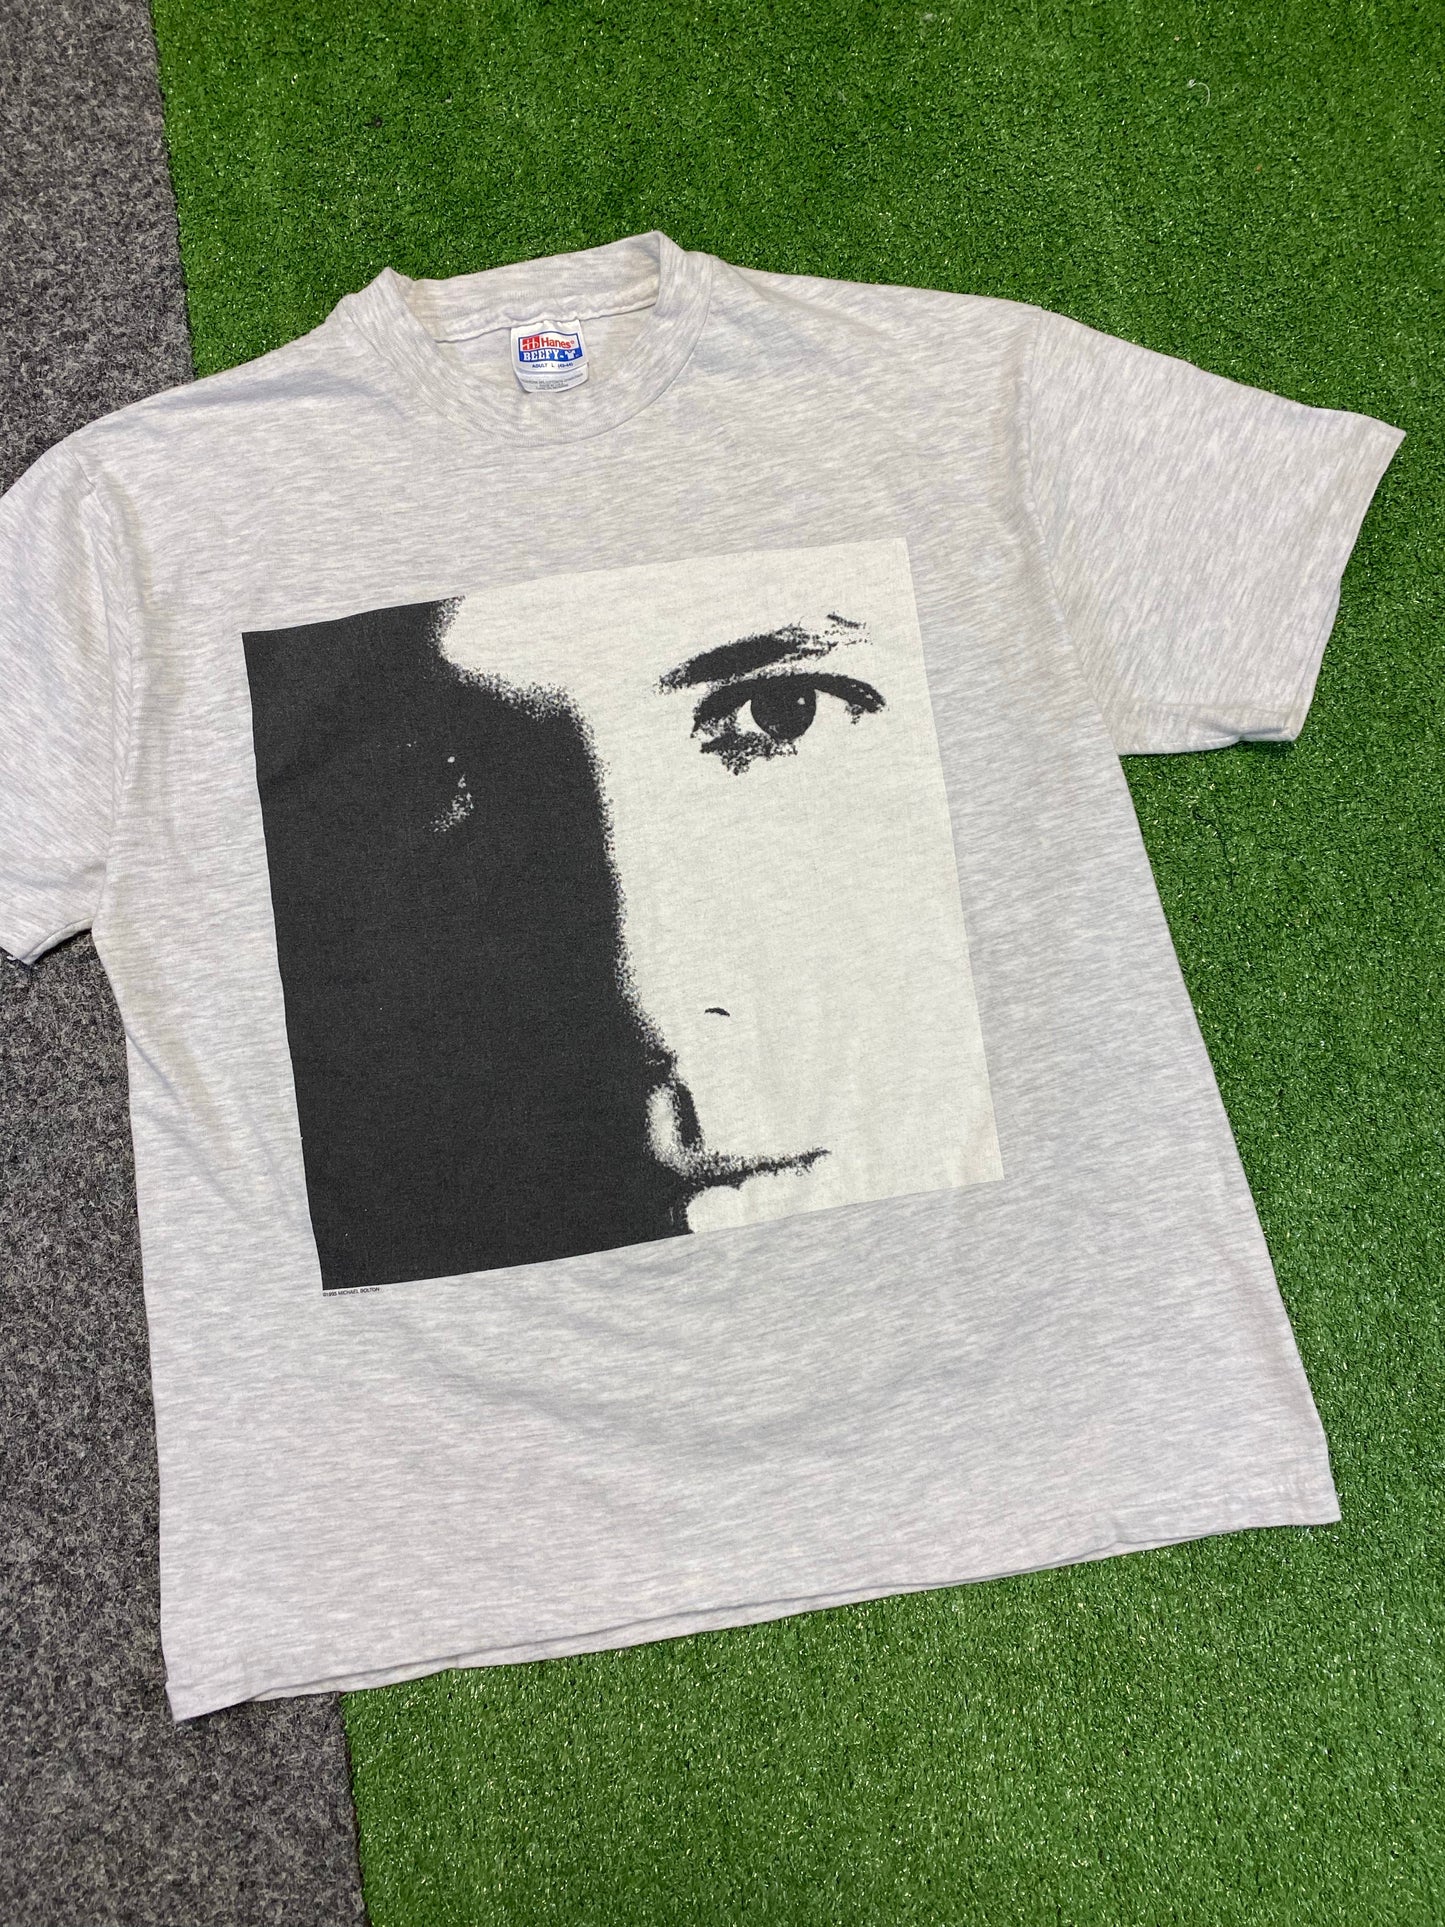 1996 Greatest Hits Michael Bolton Tour T-Shirt